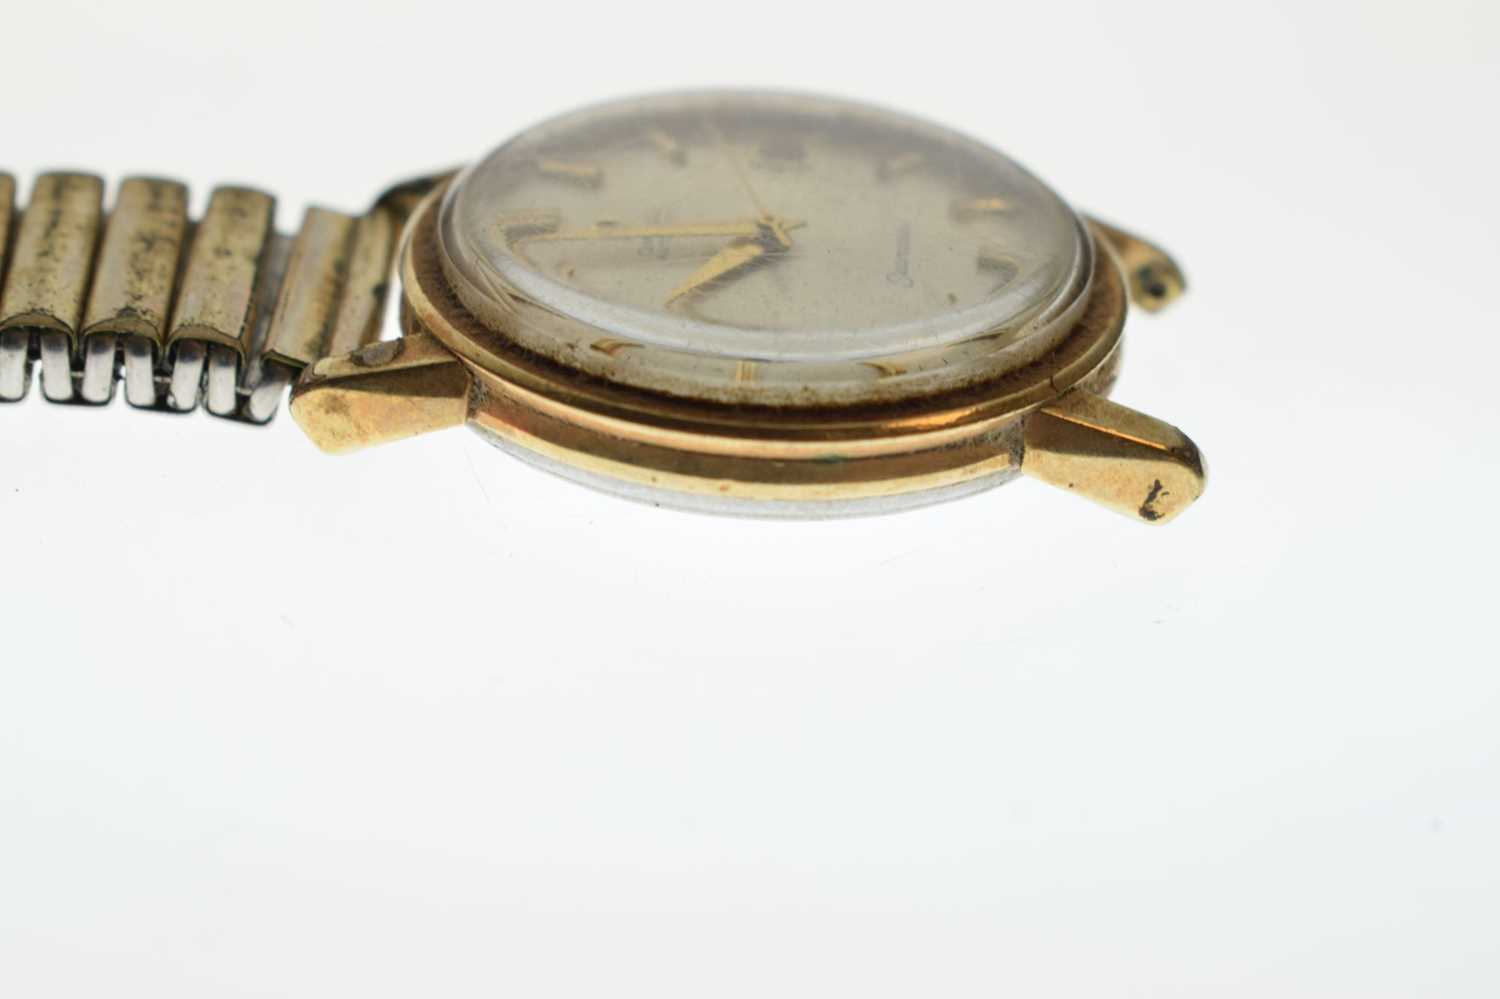 Omega - Gentleman's Seamaster gold plated bracelet watch - Image 5 of 8